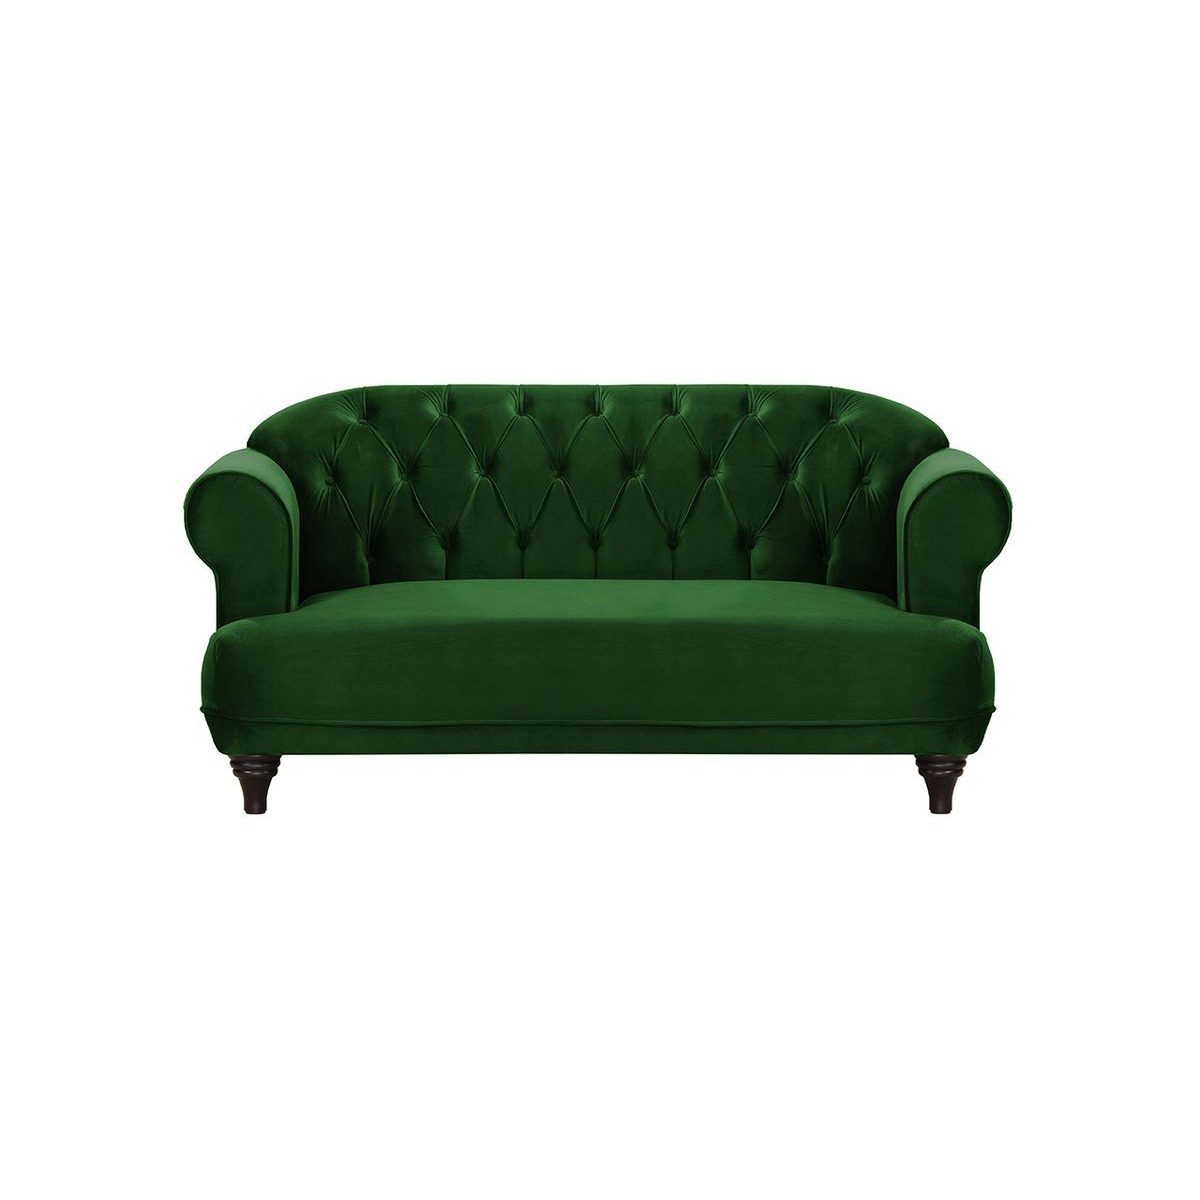 Harto 3 Seater Sofa, green - image 1